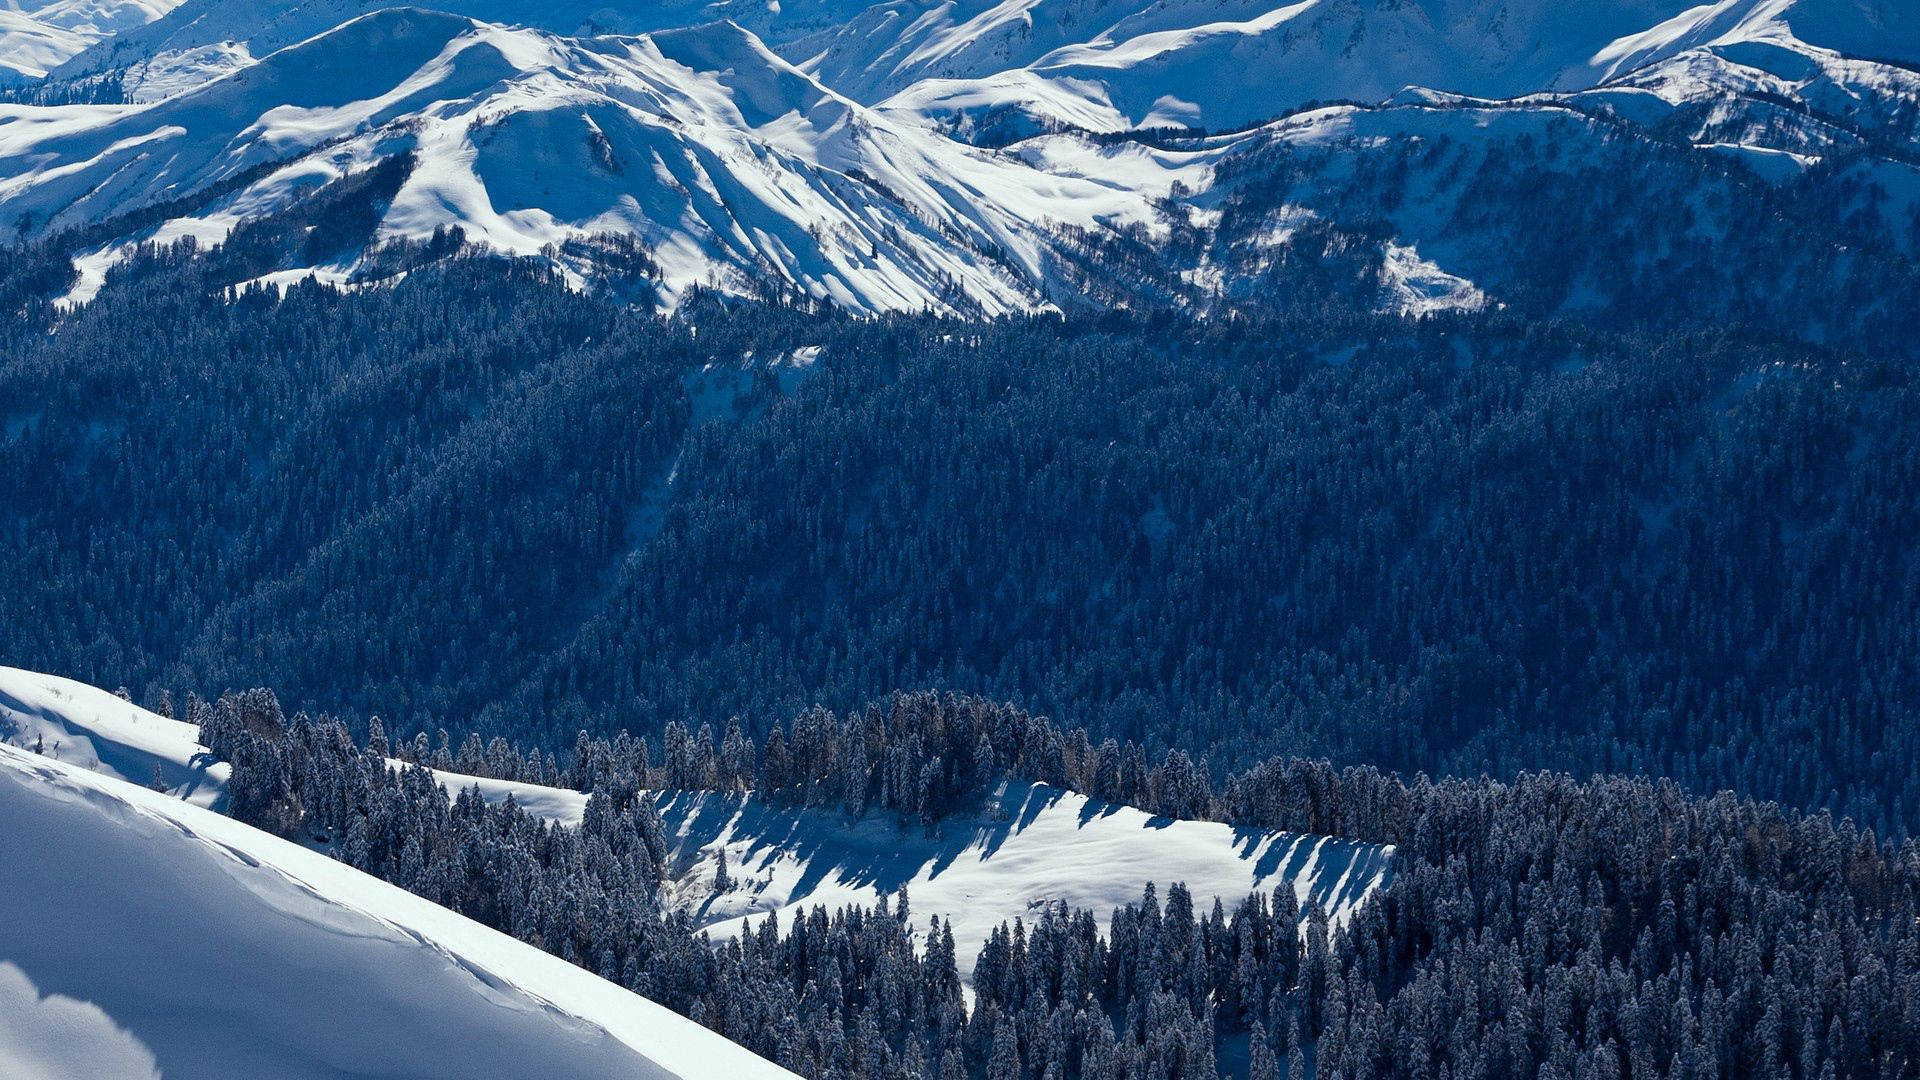 Take in the beauty of the Snowy Mountain Range Wallpaper